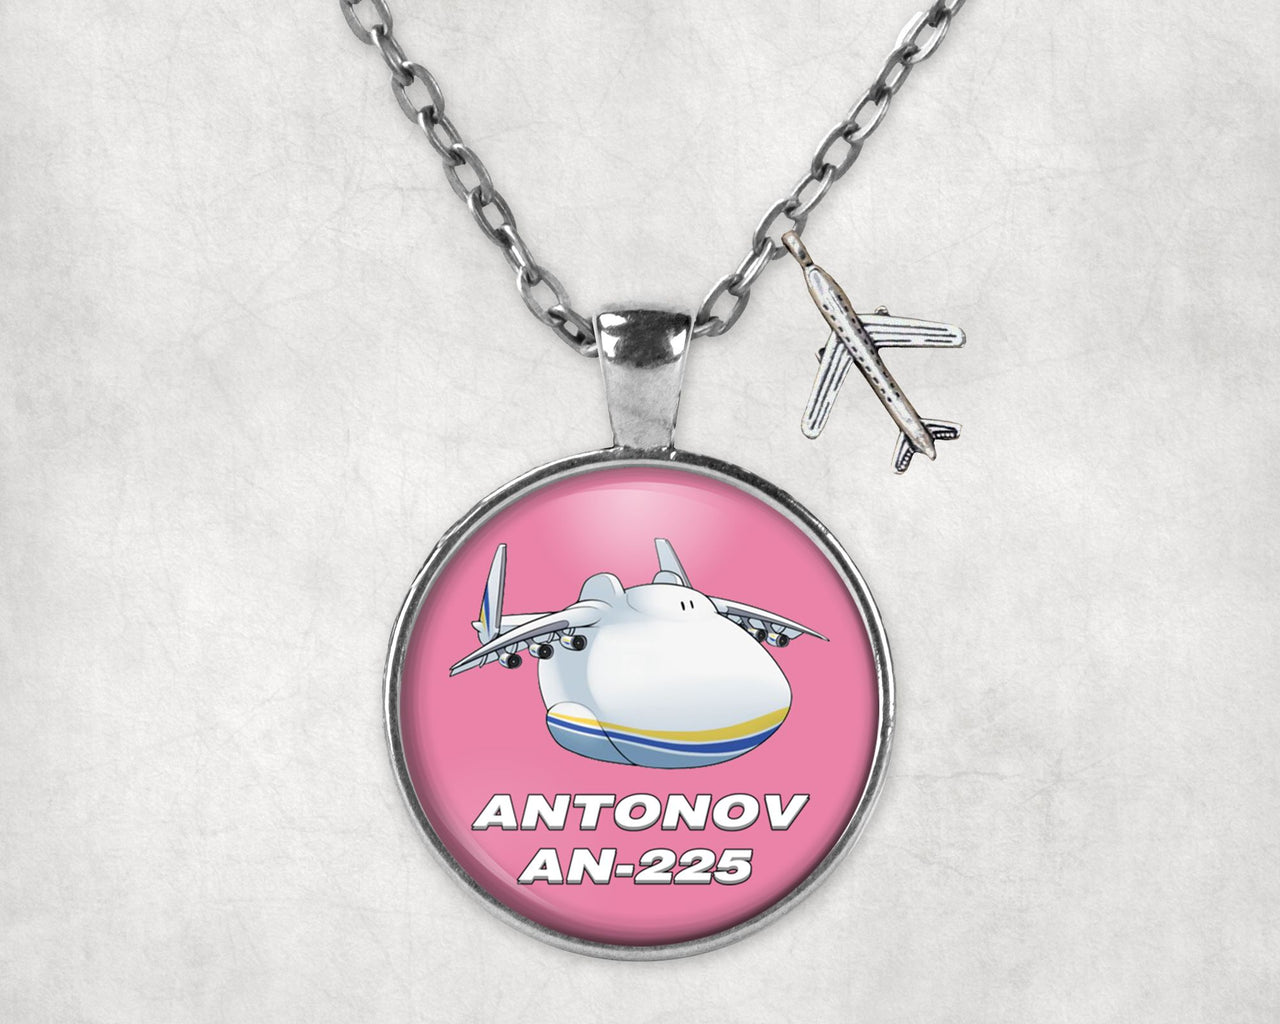 Antonov AN-225 (21) Designed Necklaces